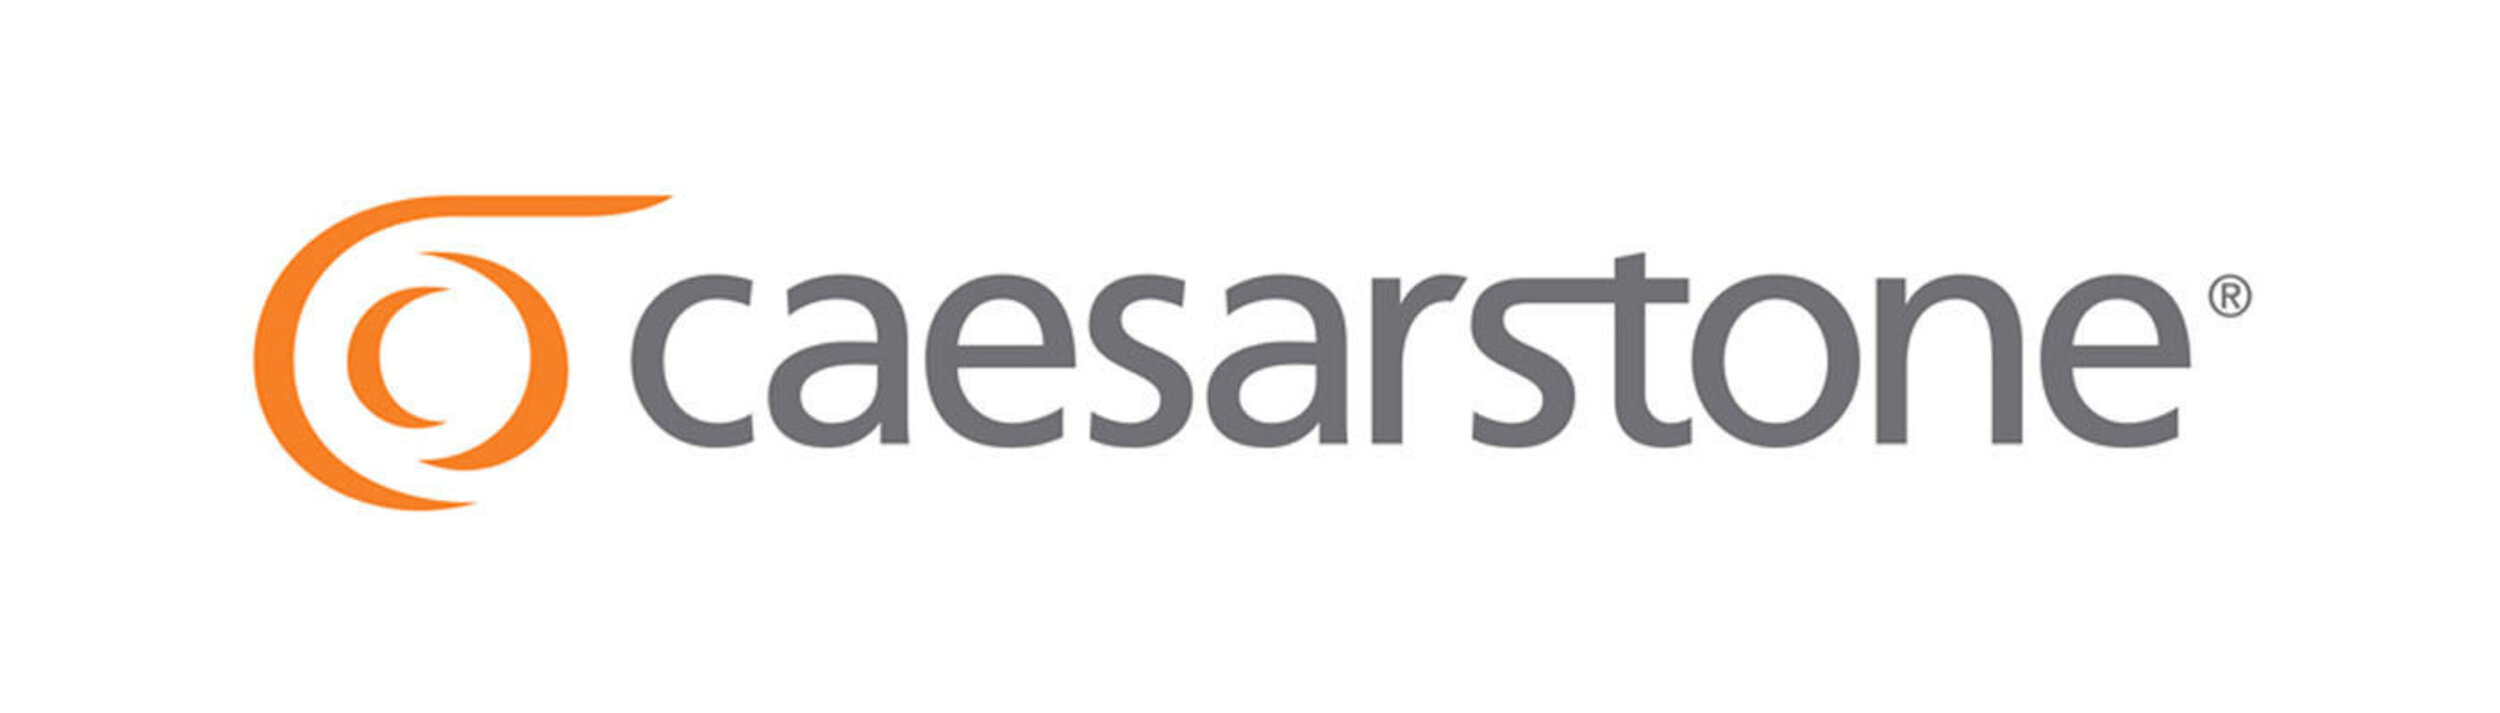 Ceasarstone Logo.jpg